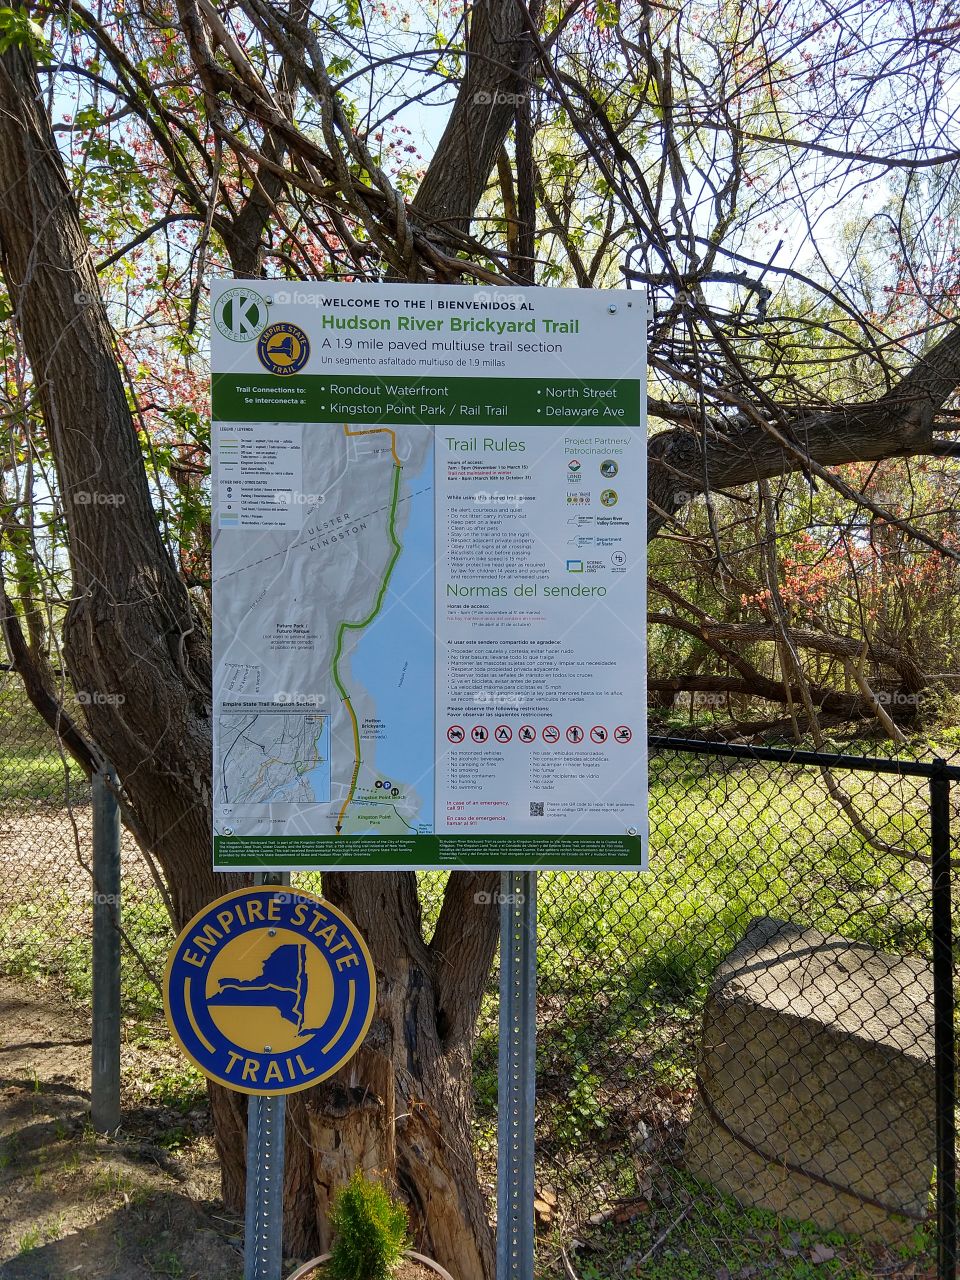 Hudson River Brickyard Trail